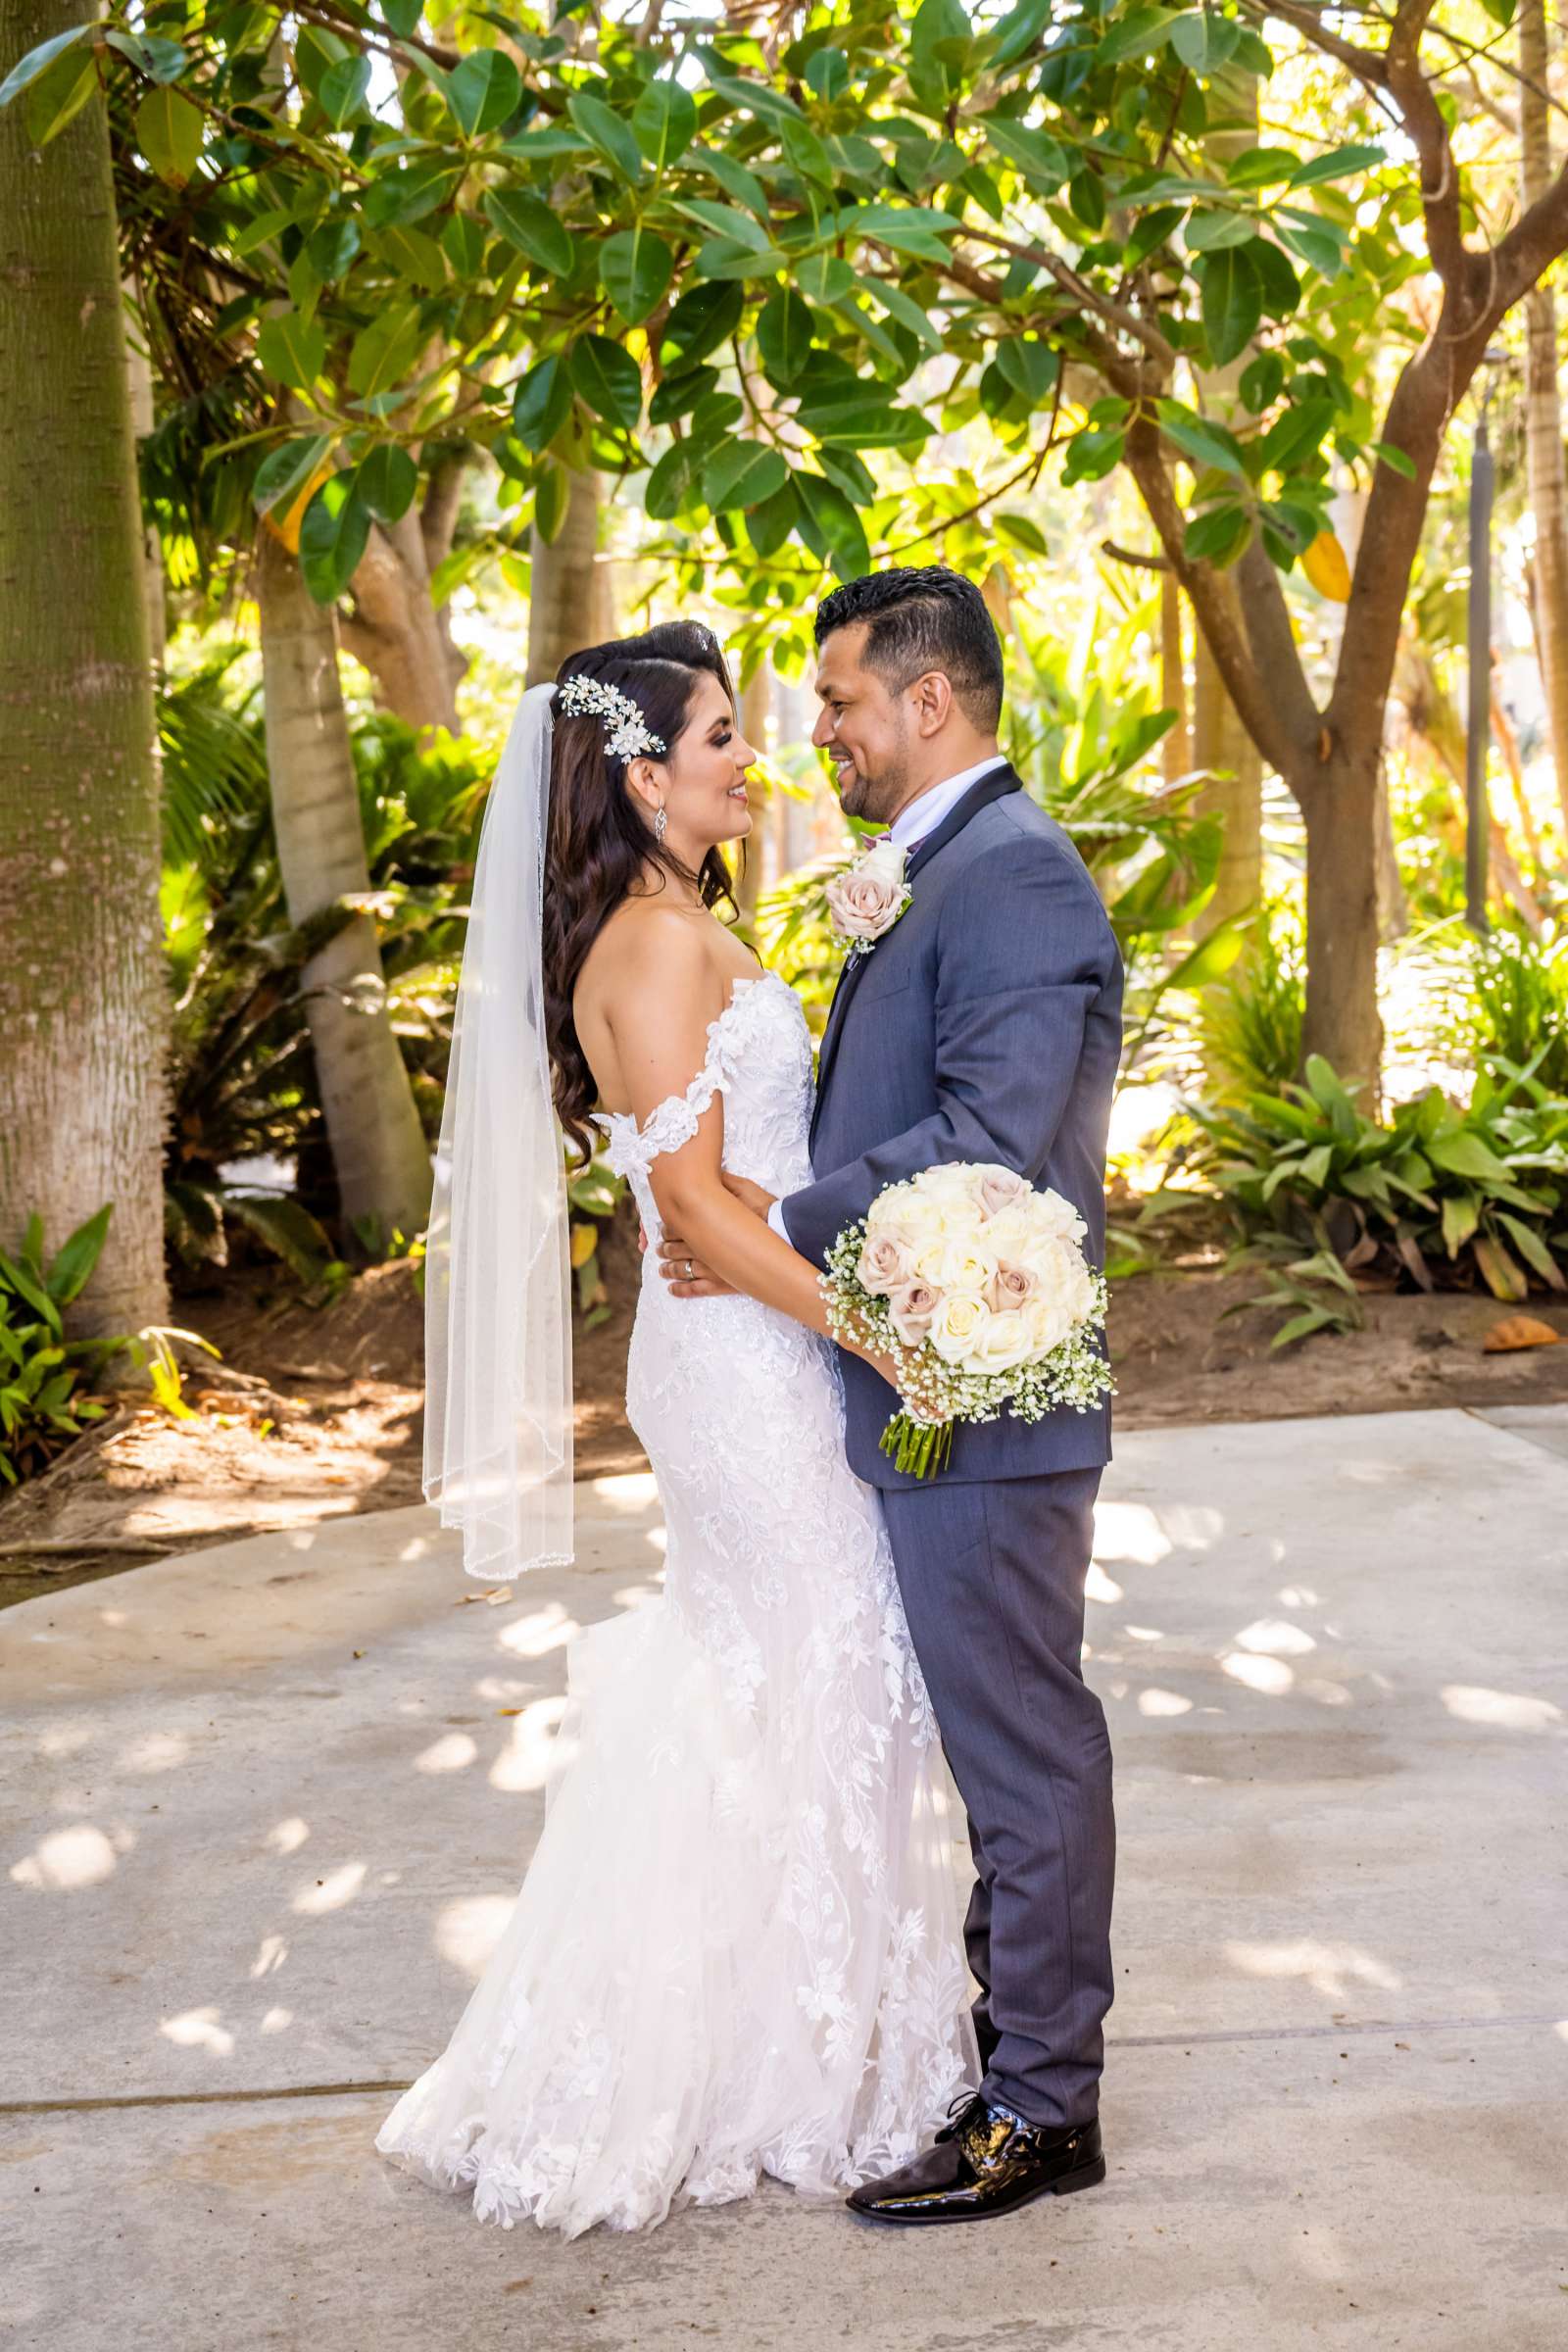 Paradise Point Wedding, Sinthia and Jose Wedding Photo #78 by True Photography